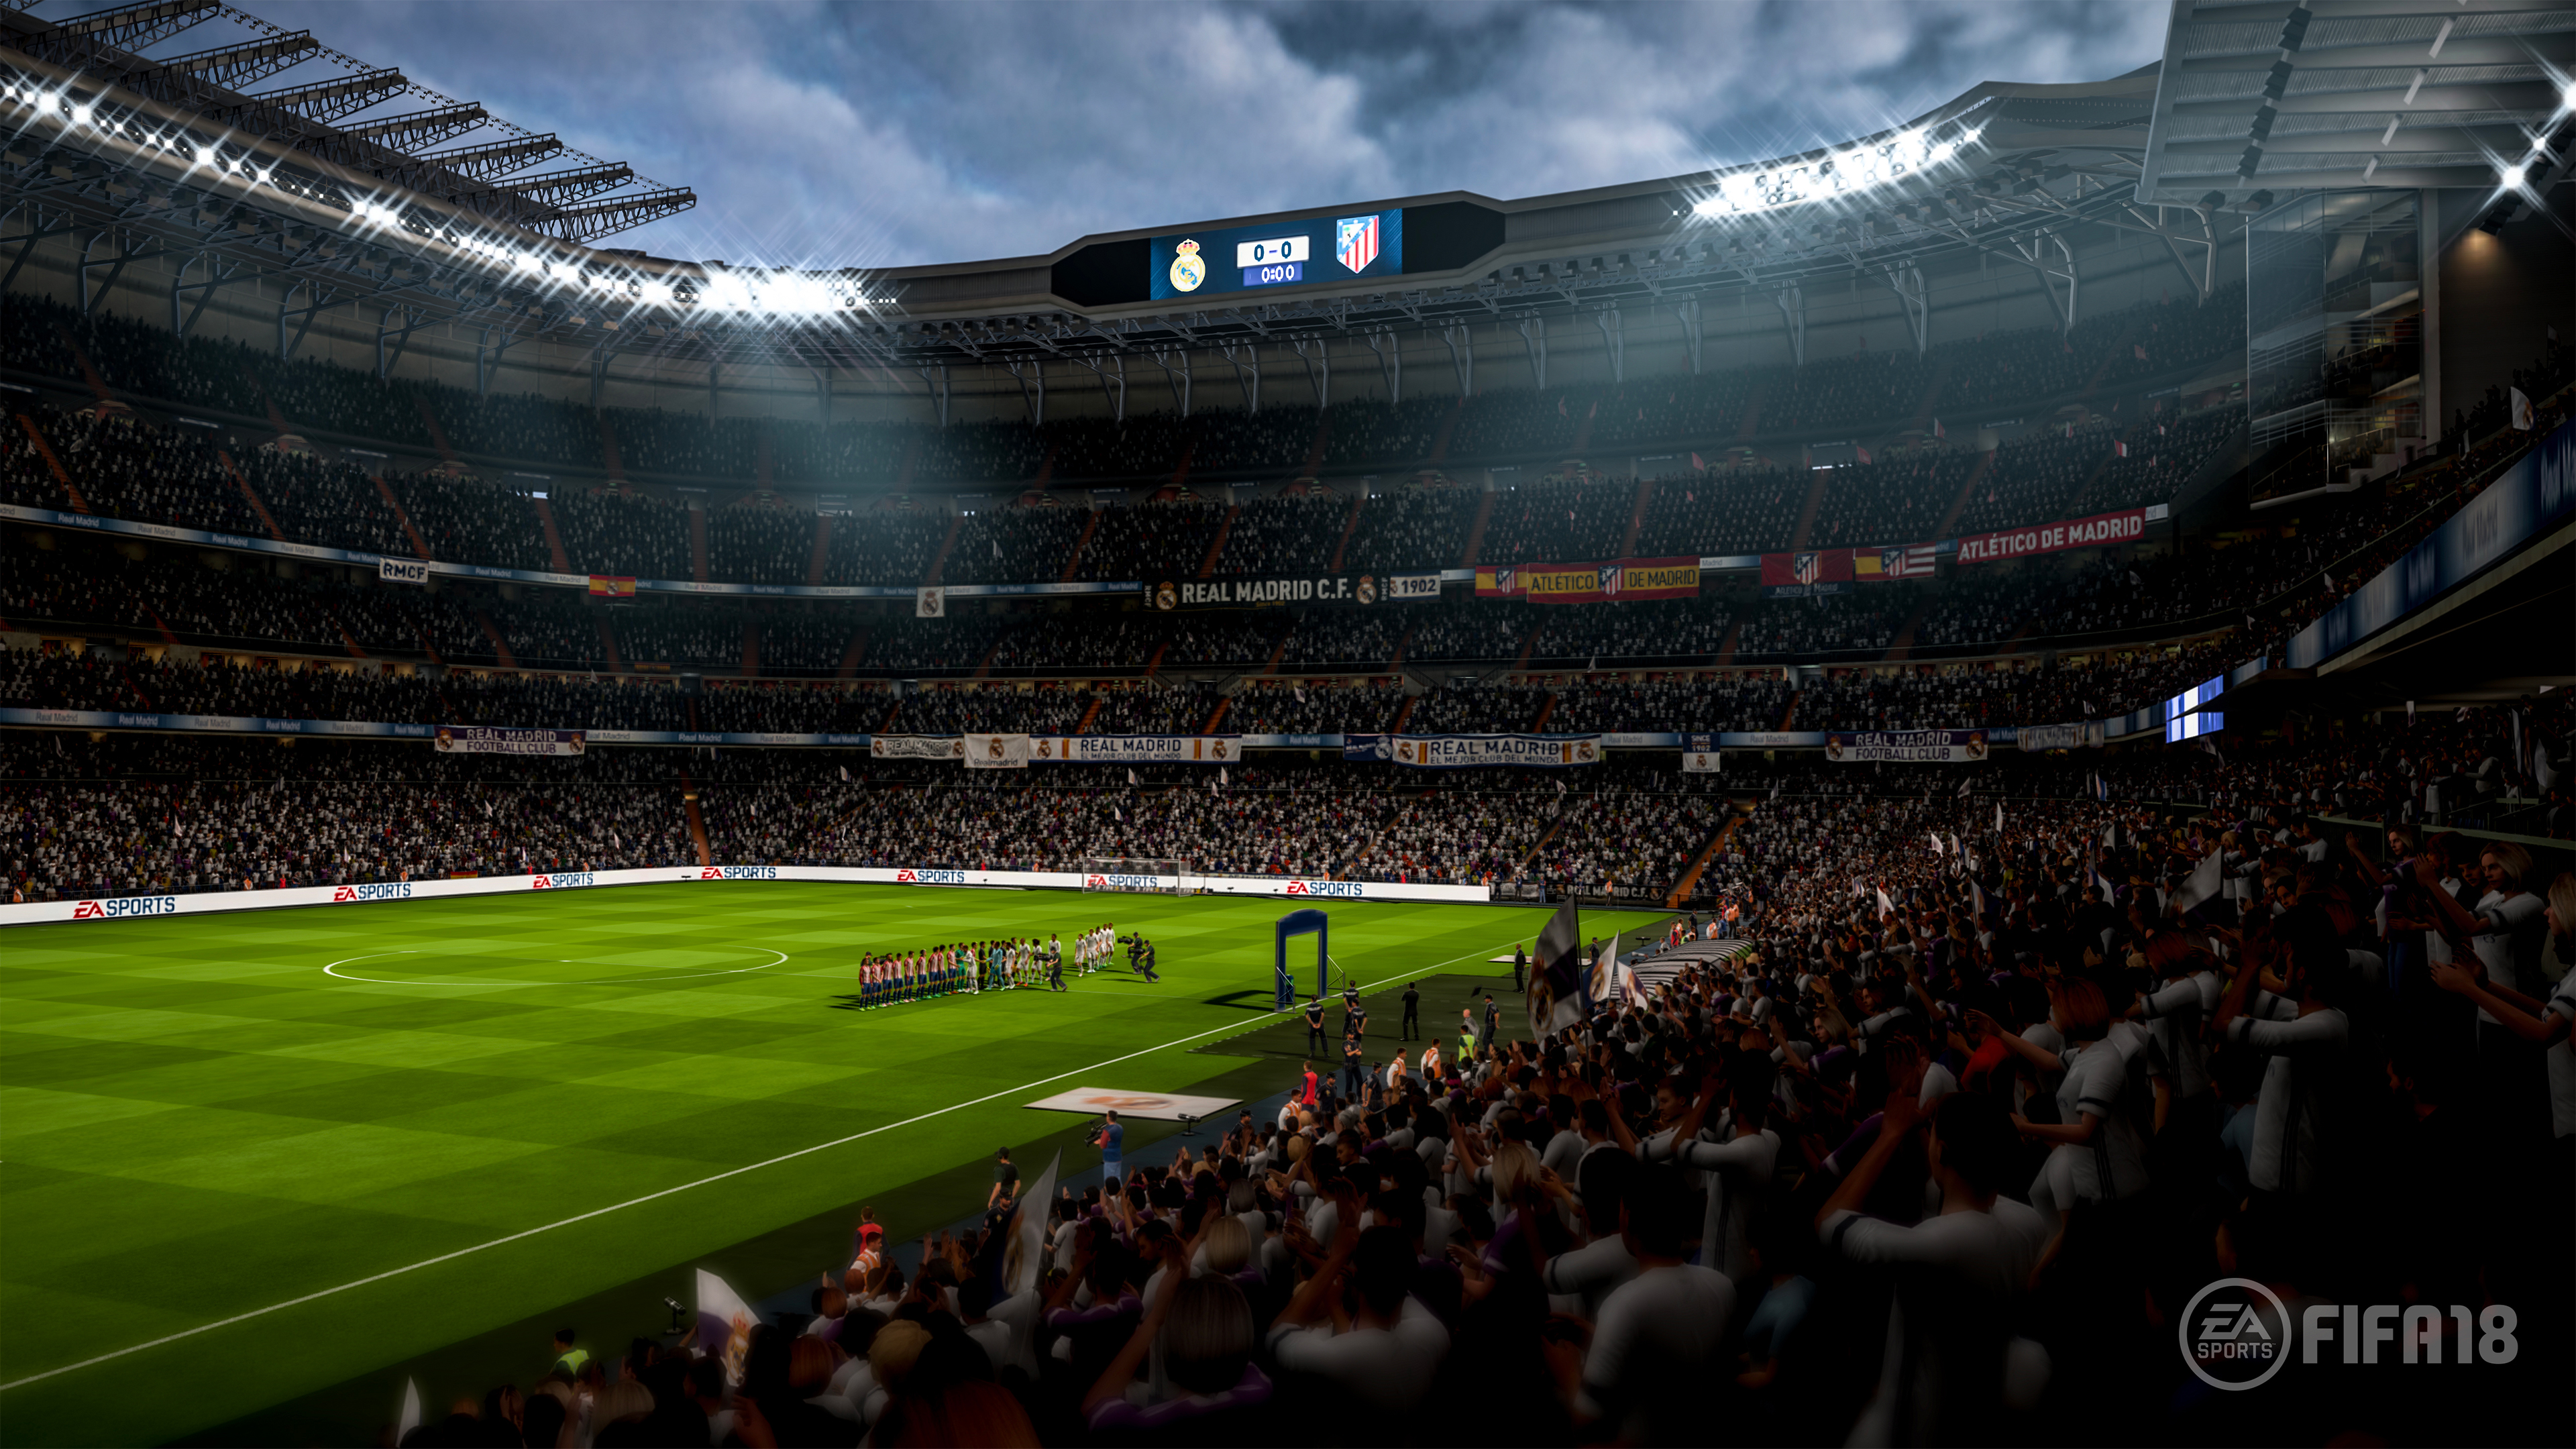 FIFA 18 Wallpapers in Ultra HD 4K Gameranx